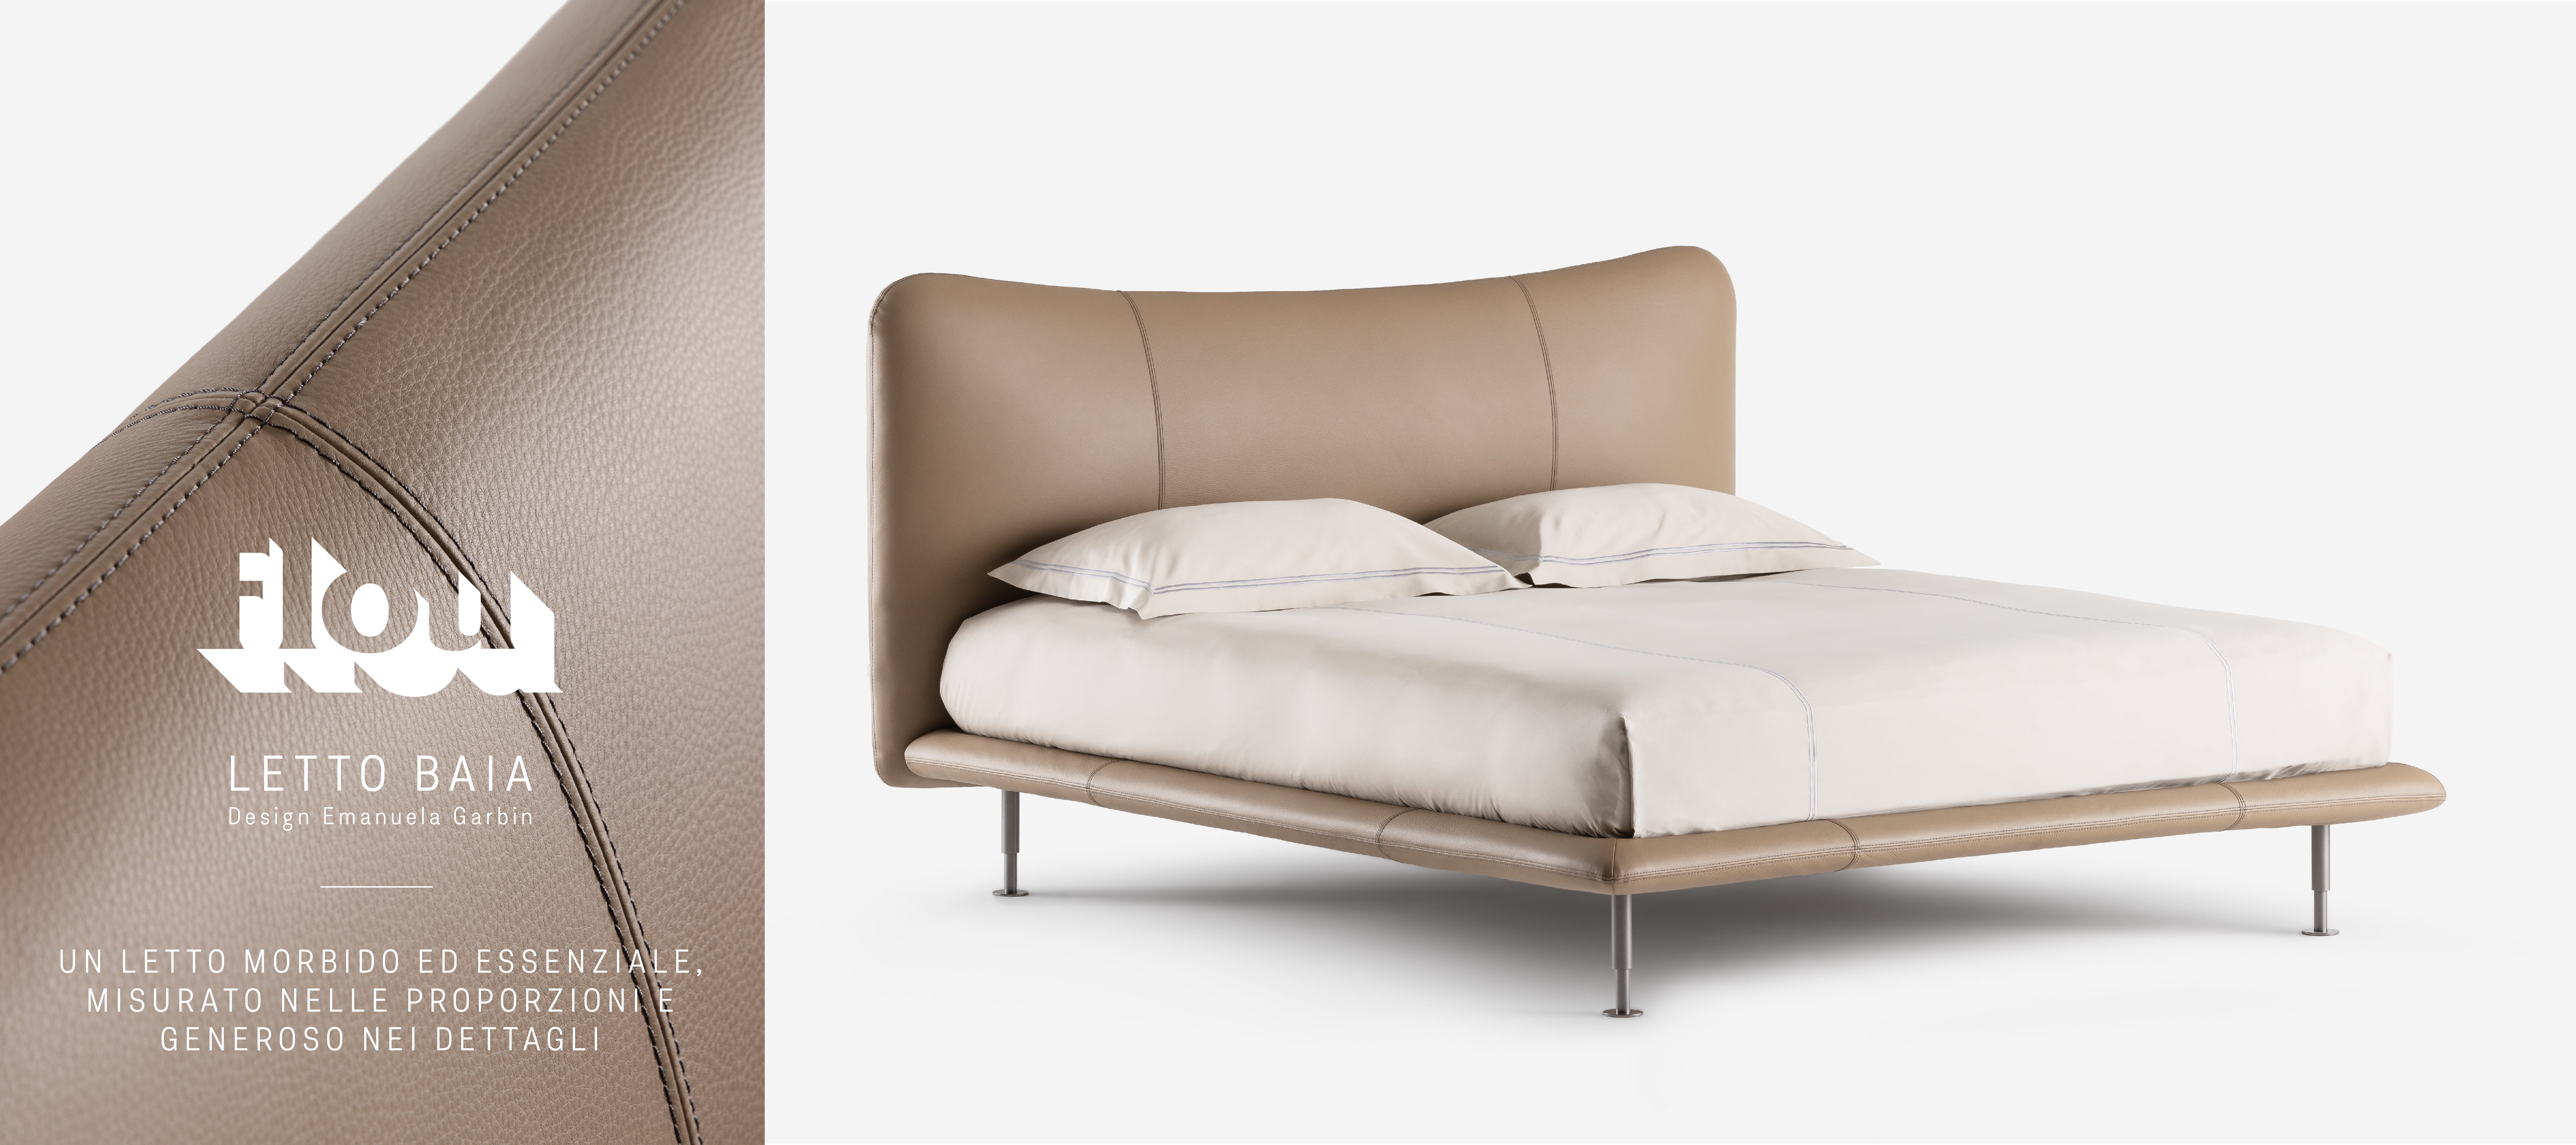 Flou presenta il letto Baia, design Emanuela Garbin - Galbiati Milano Design Hub